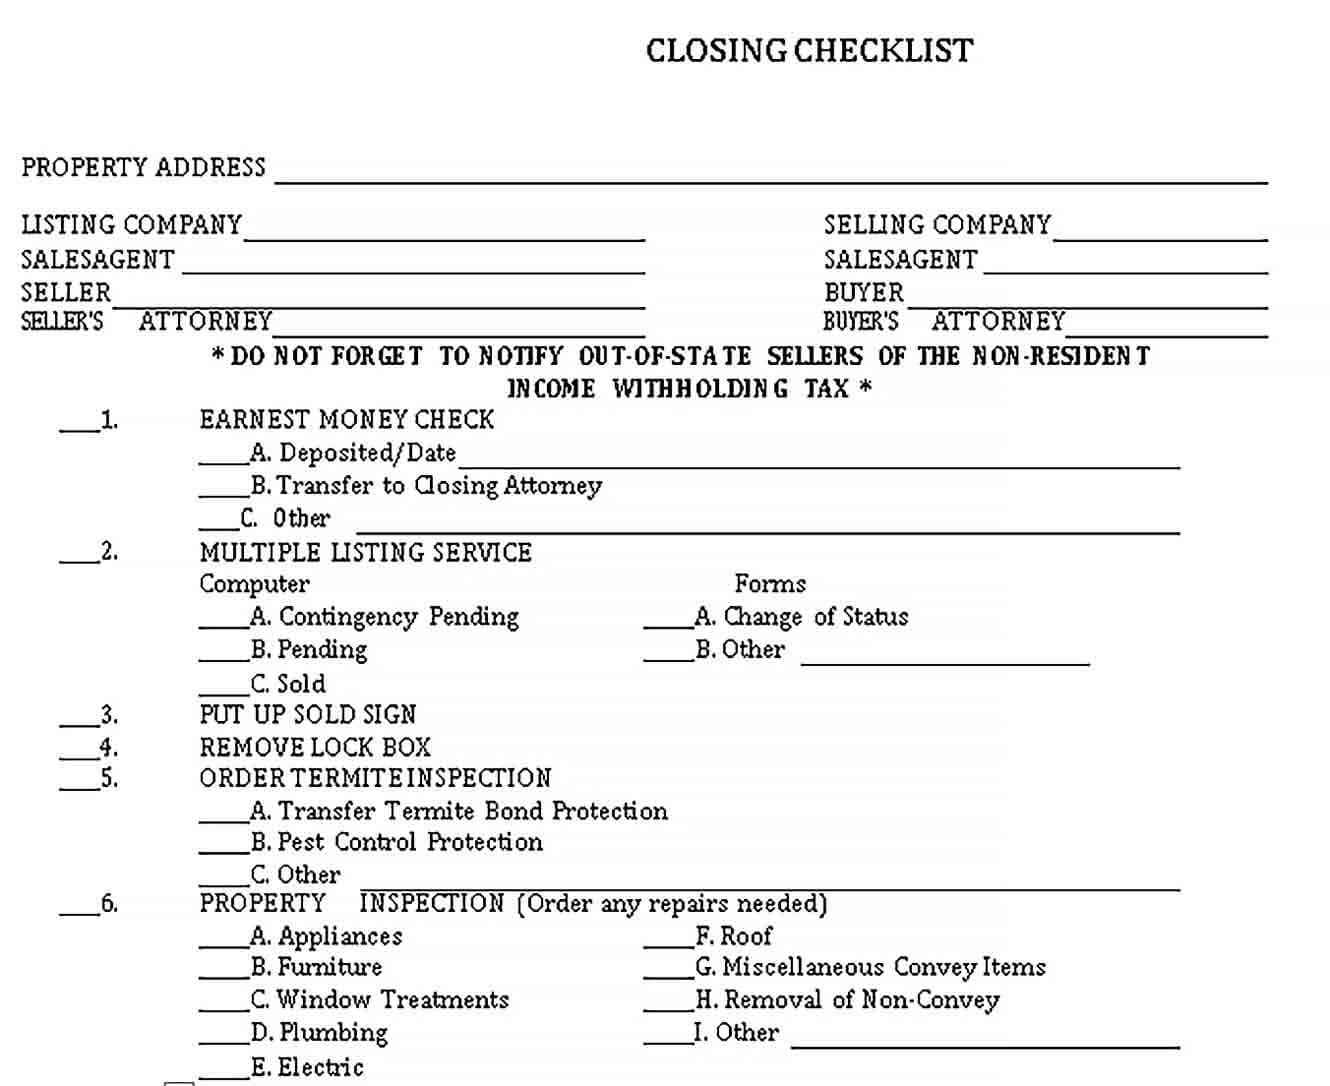 Sample Standard Property Closing Checklist Template